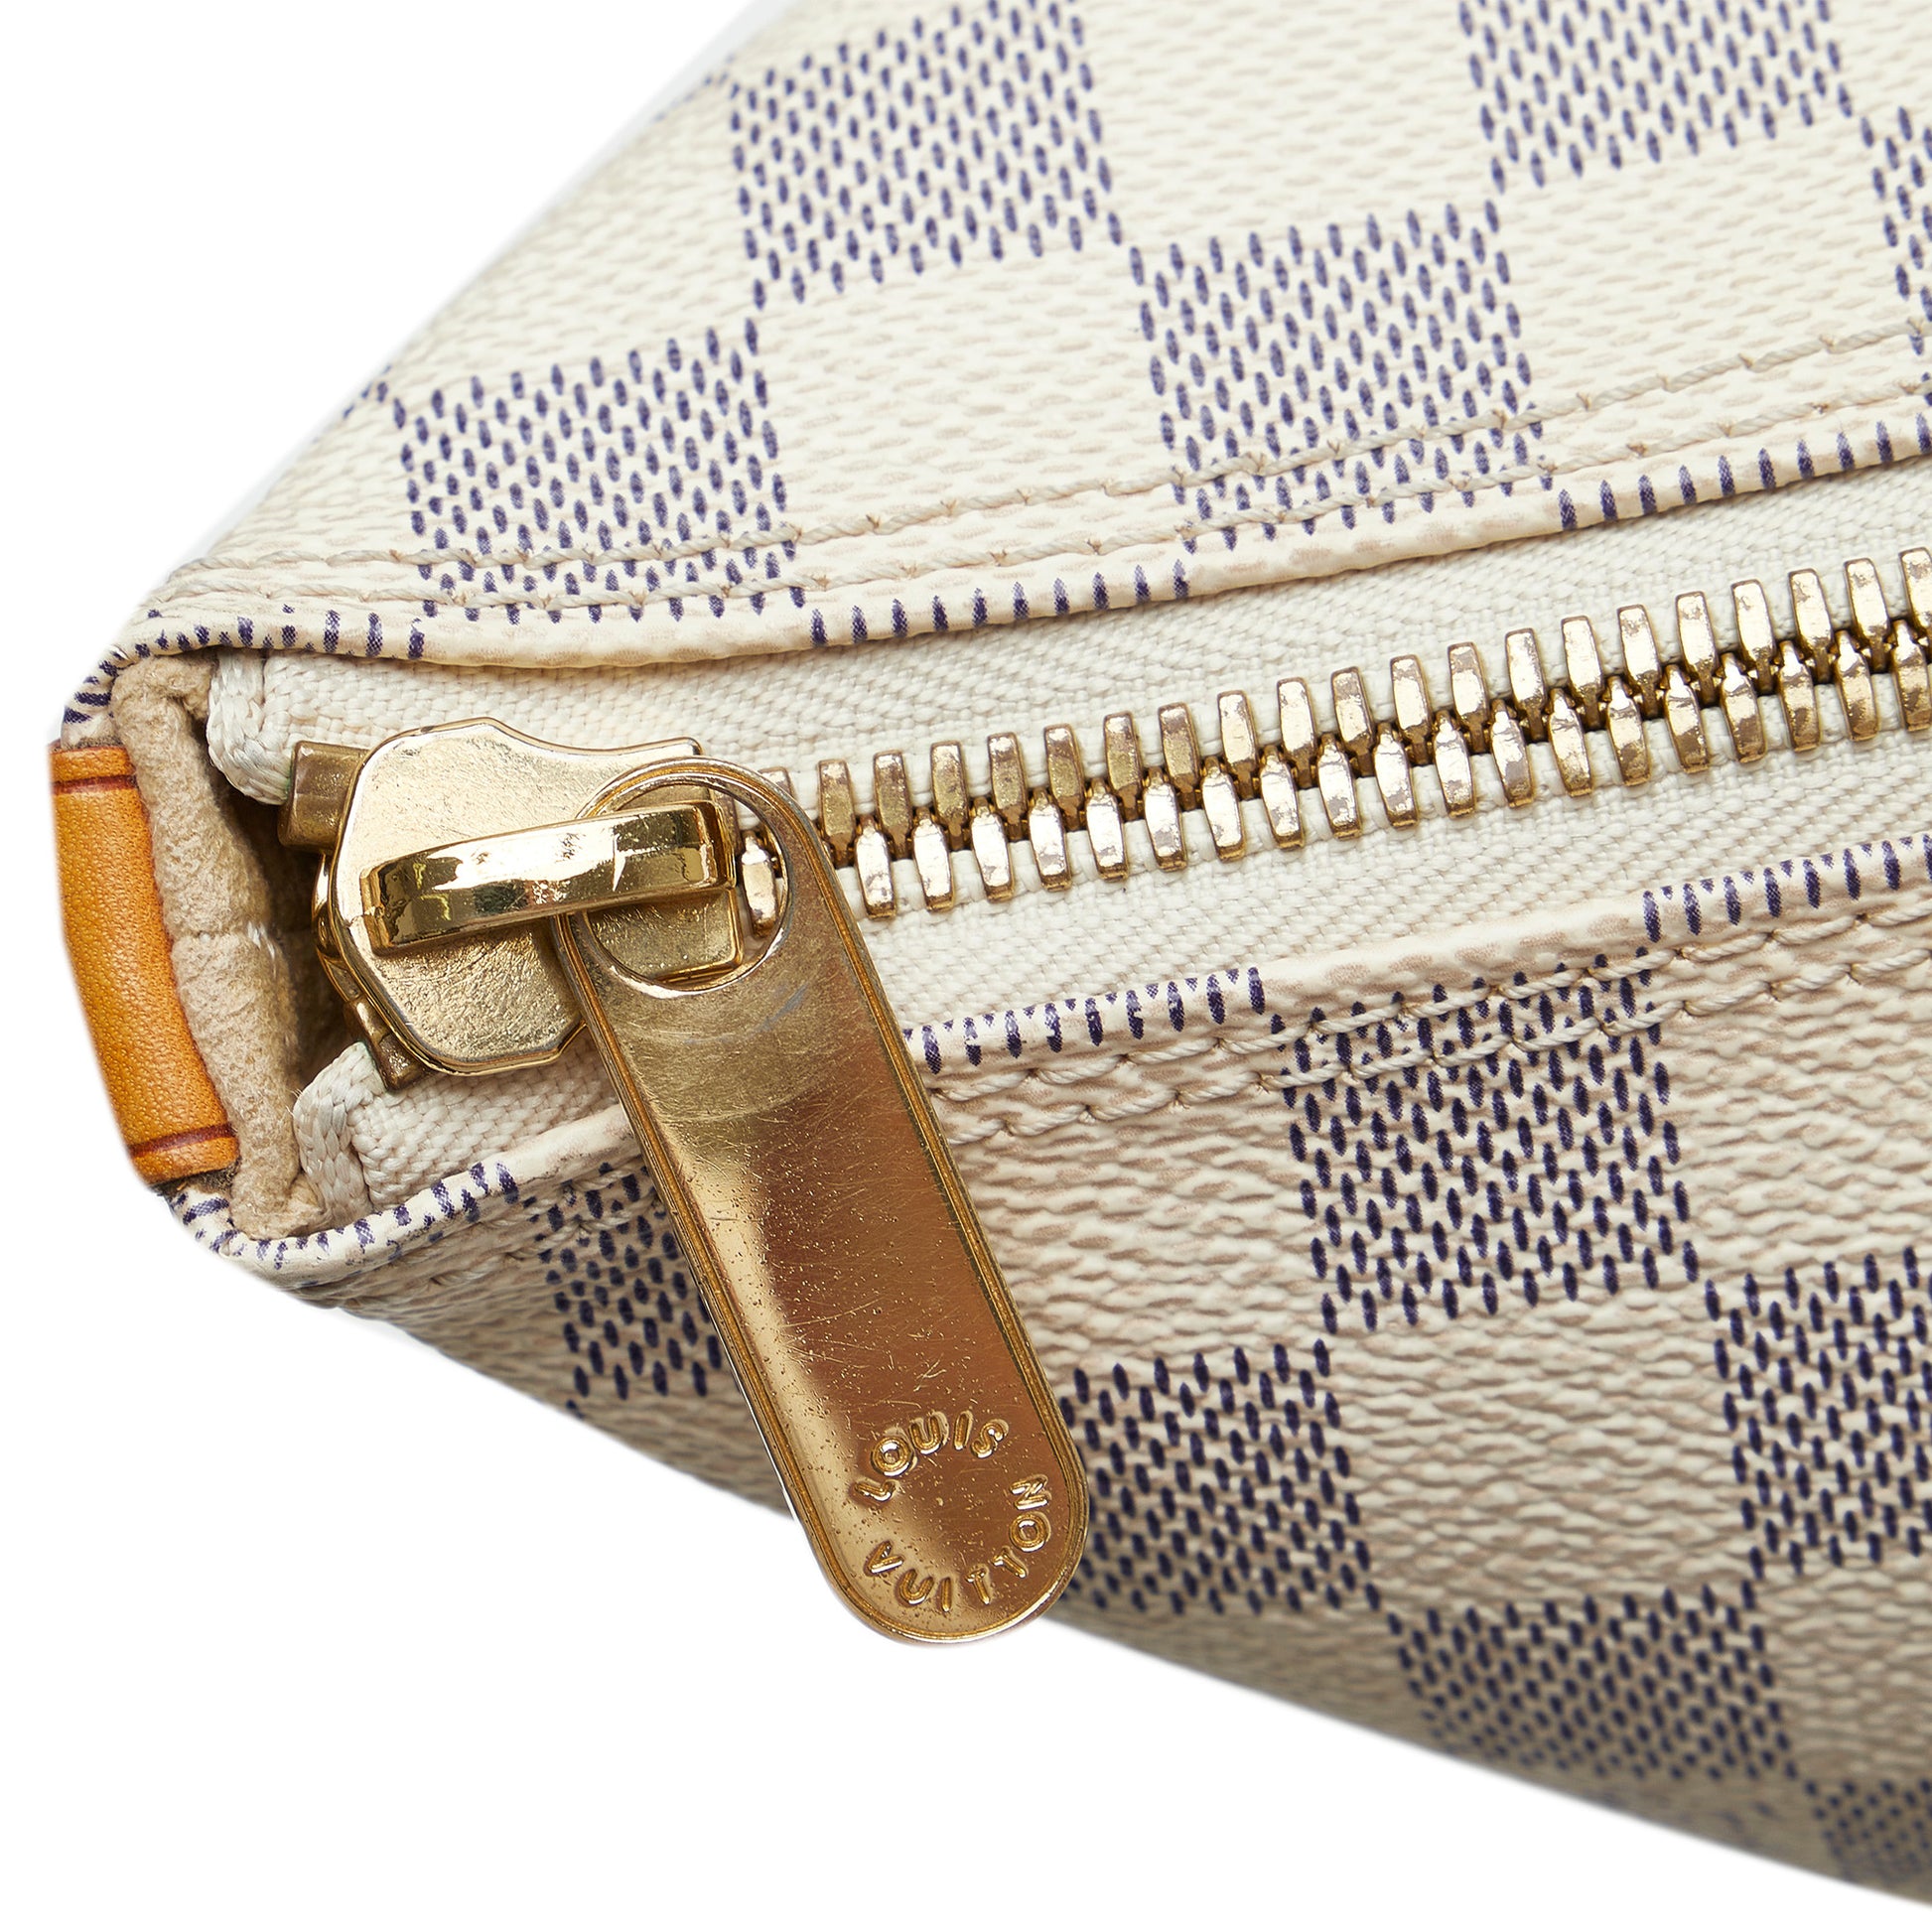 Louis Vuitton, Bags, Louis Vuitton Saleya Mm Shoulder Bag Damier Azur